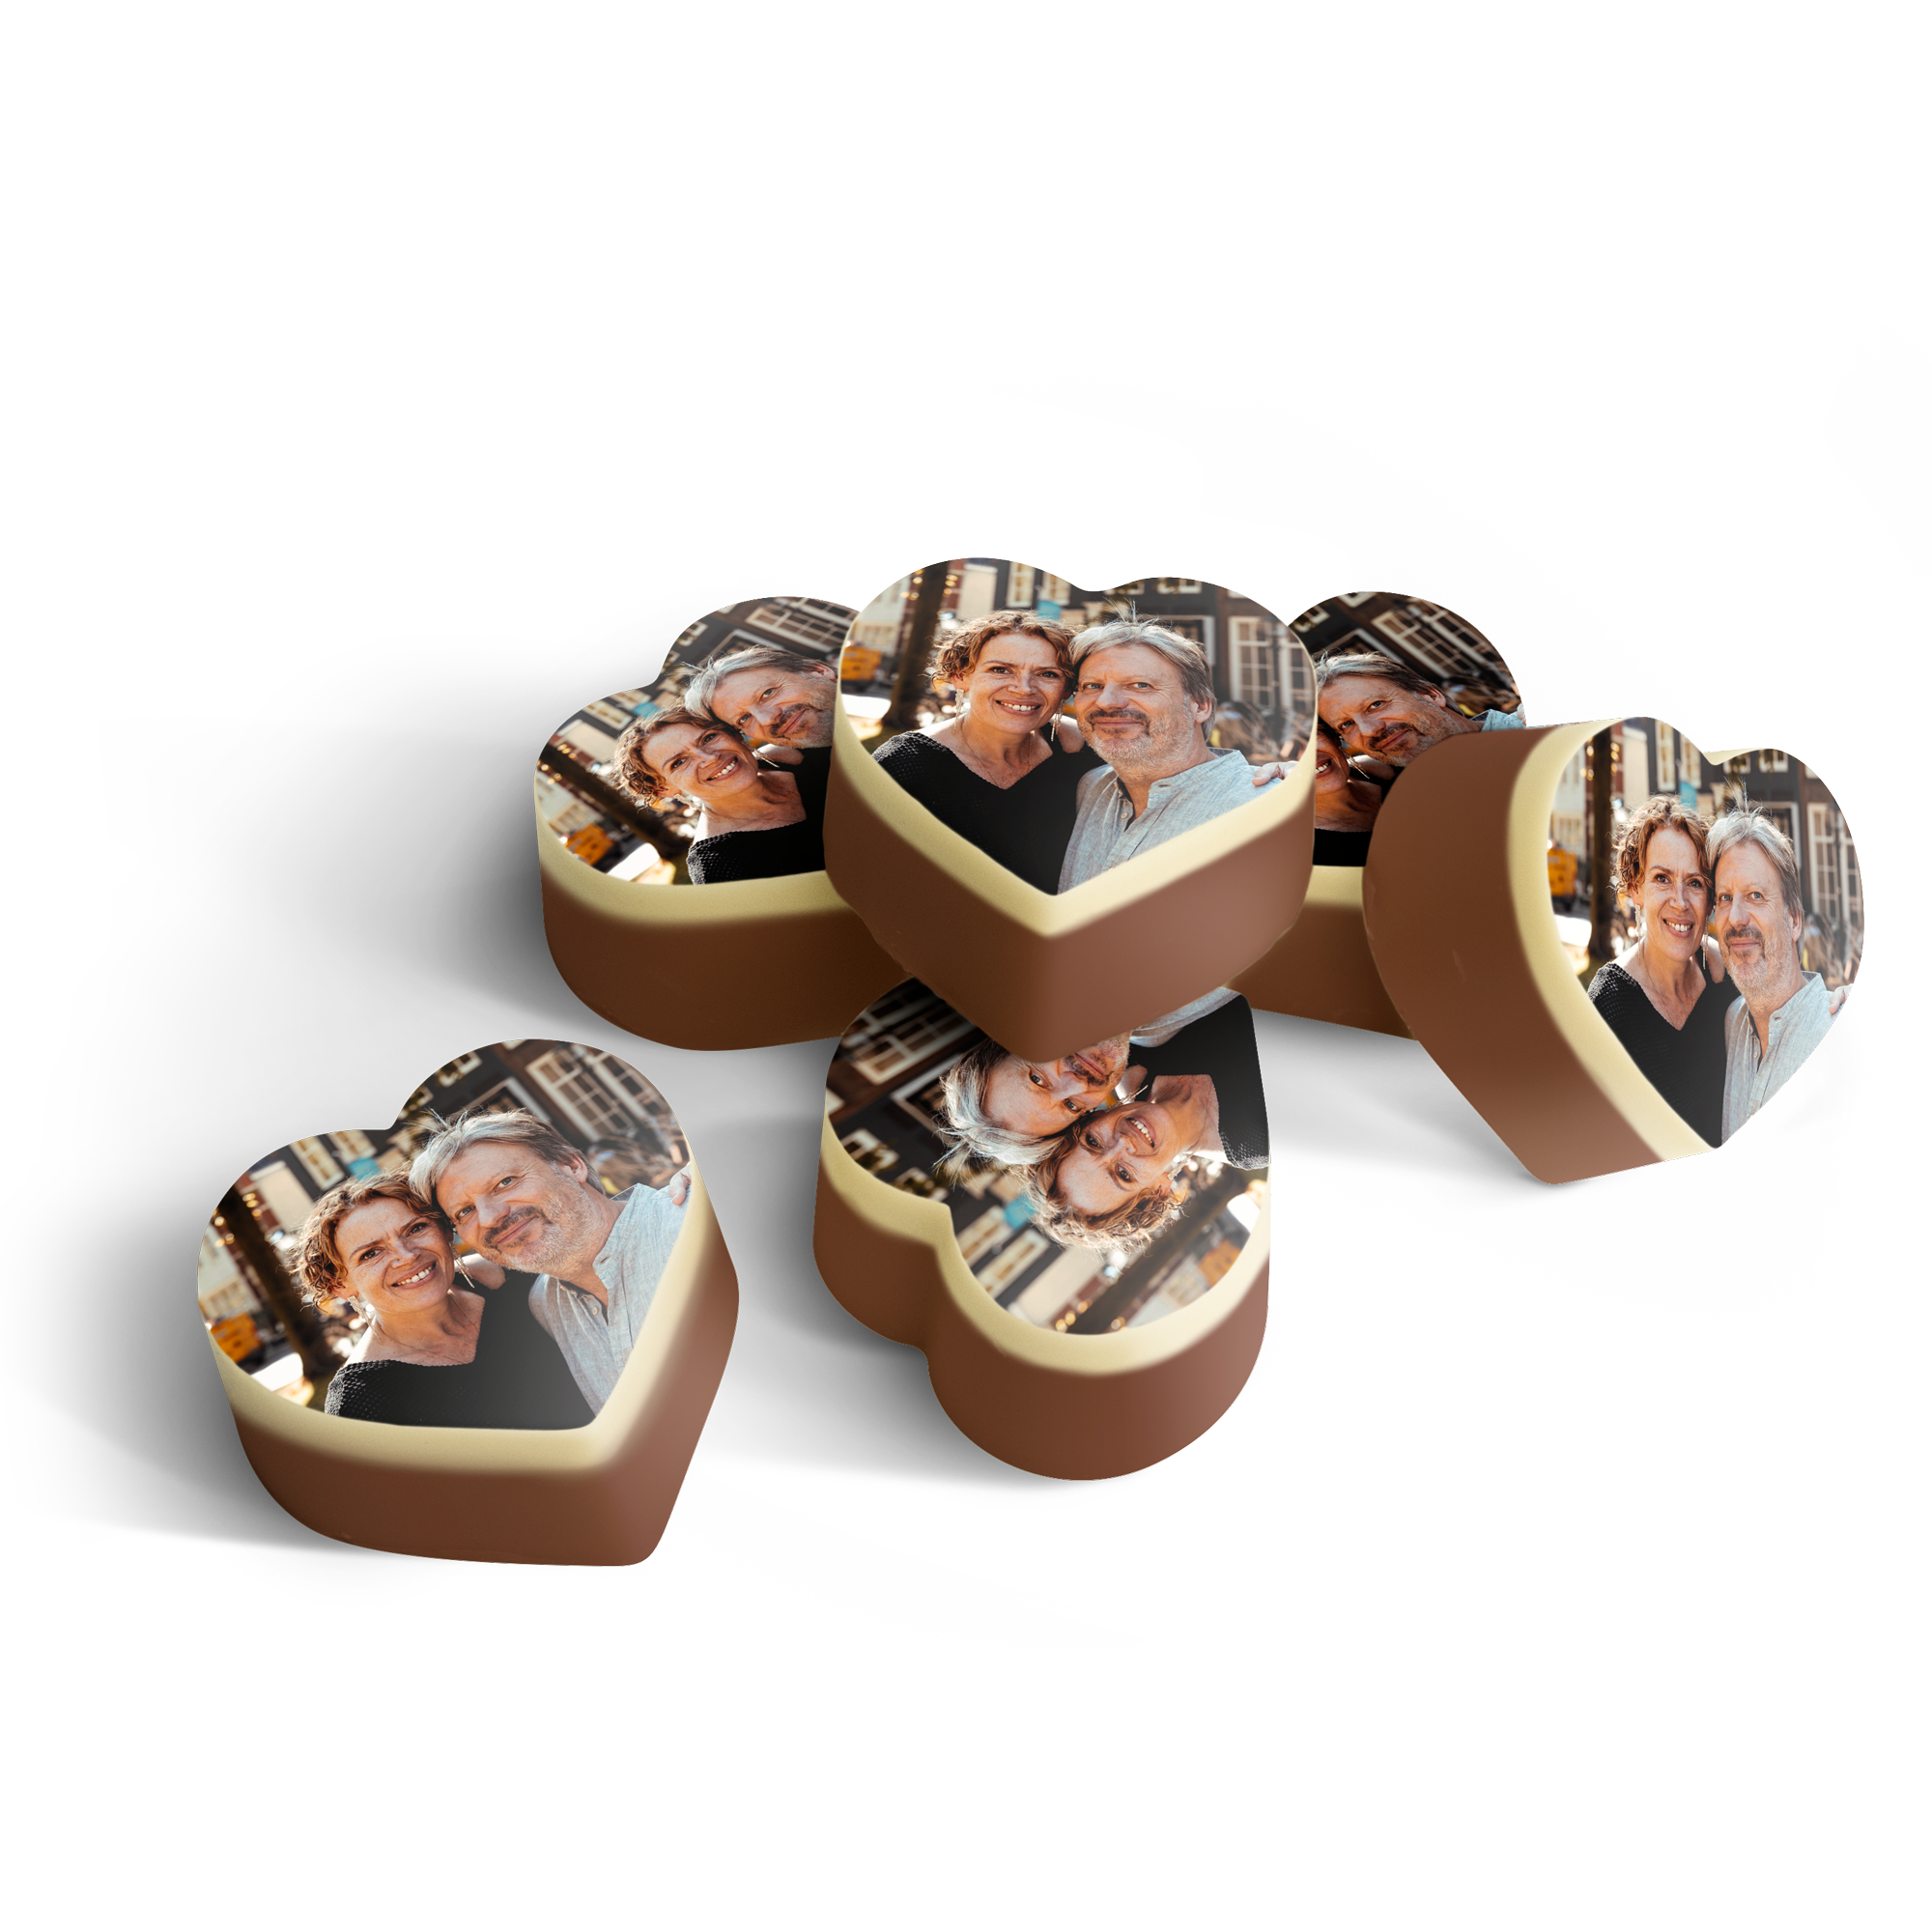 Chocolats